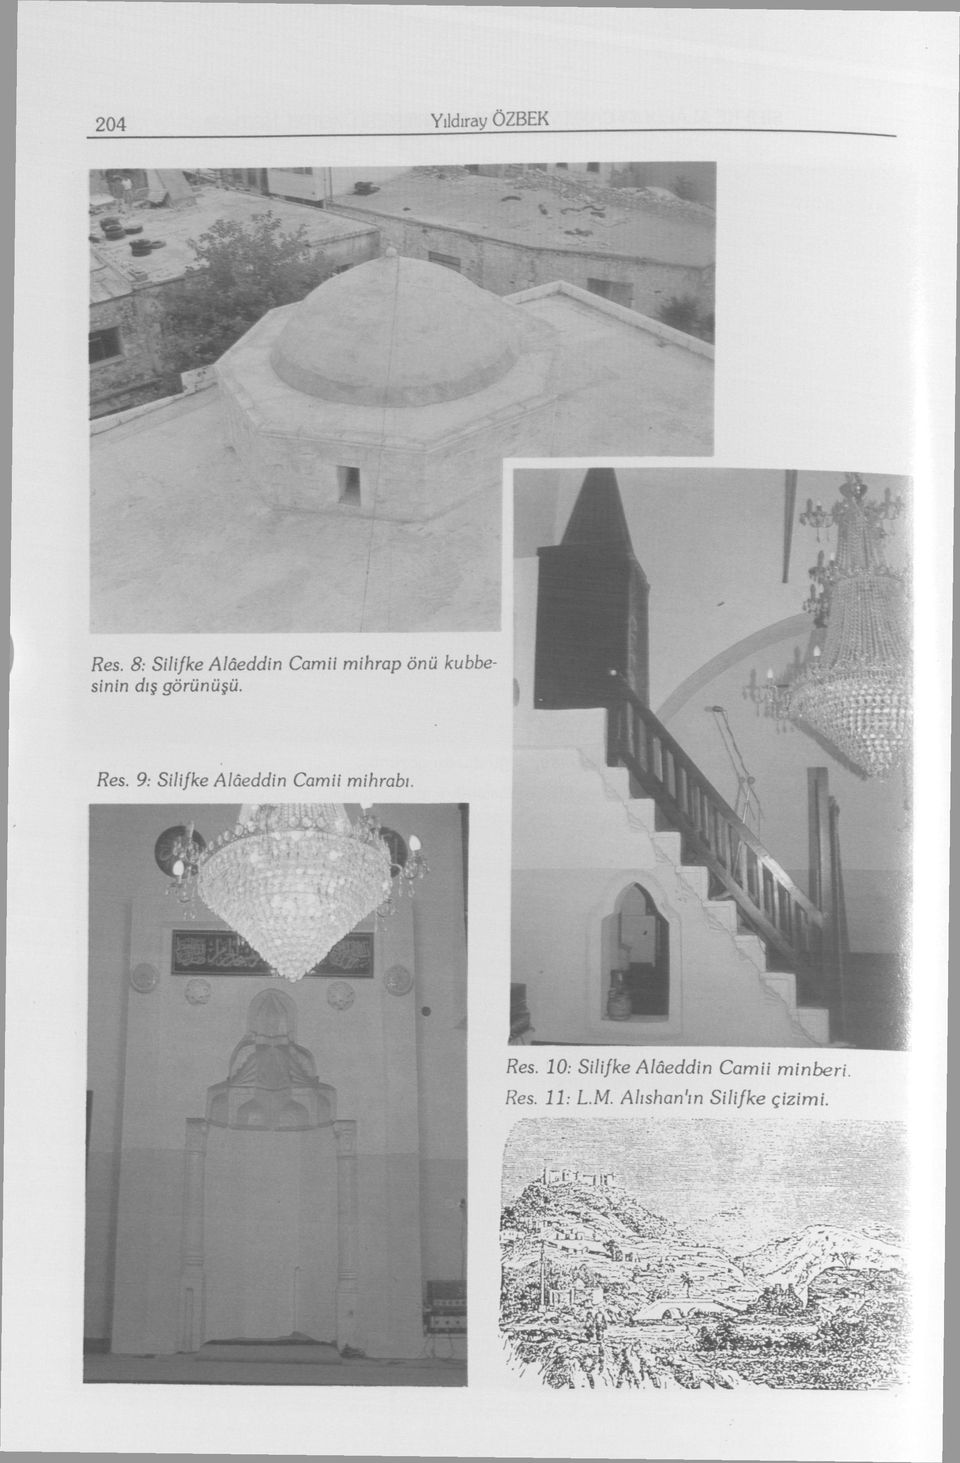 9: Silifke Alâeddin Camii mihrabı. J Res.